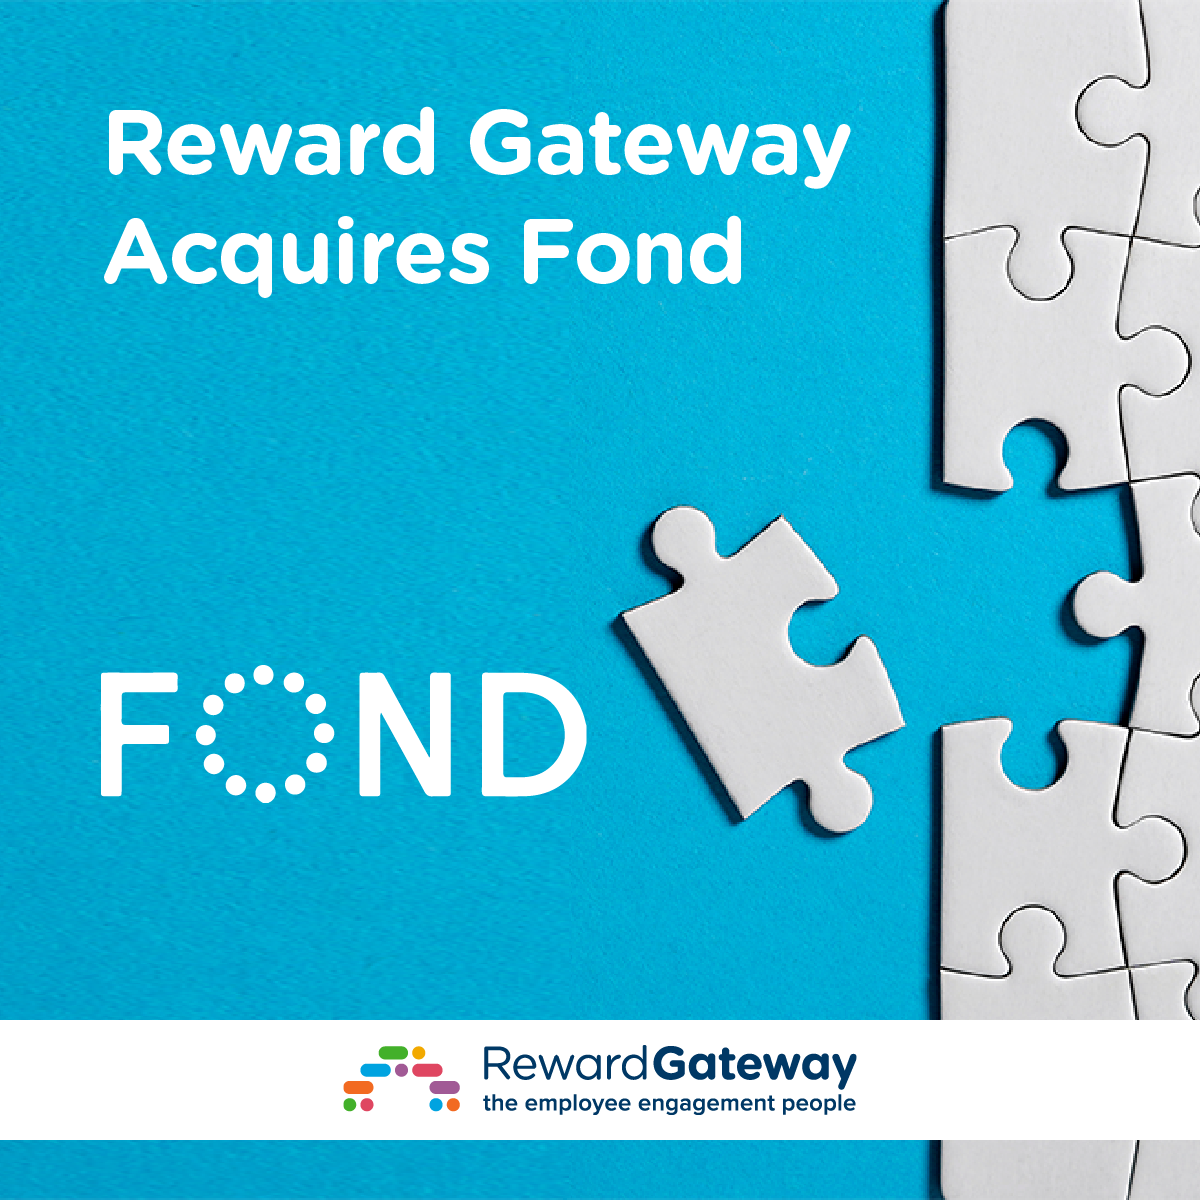 Reward Gateway Acquires Fond